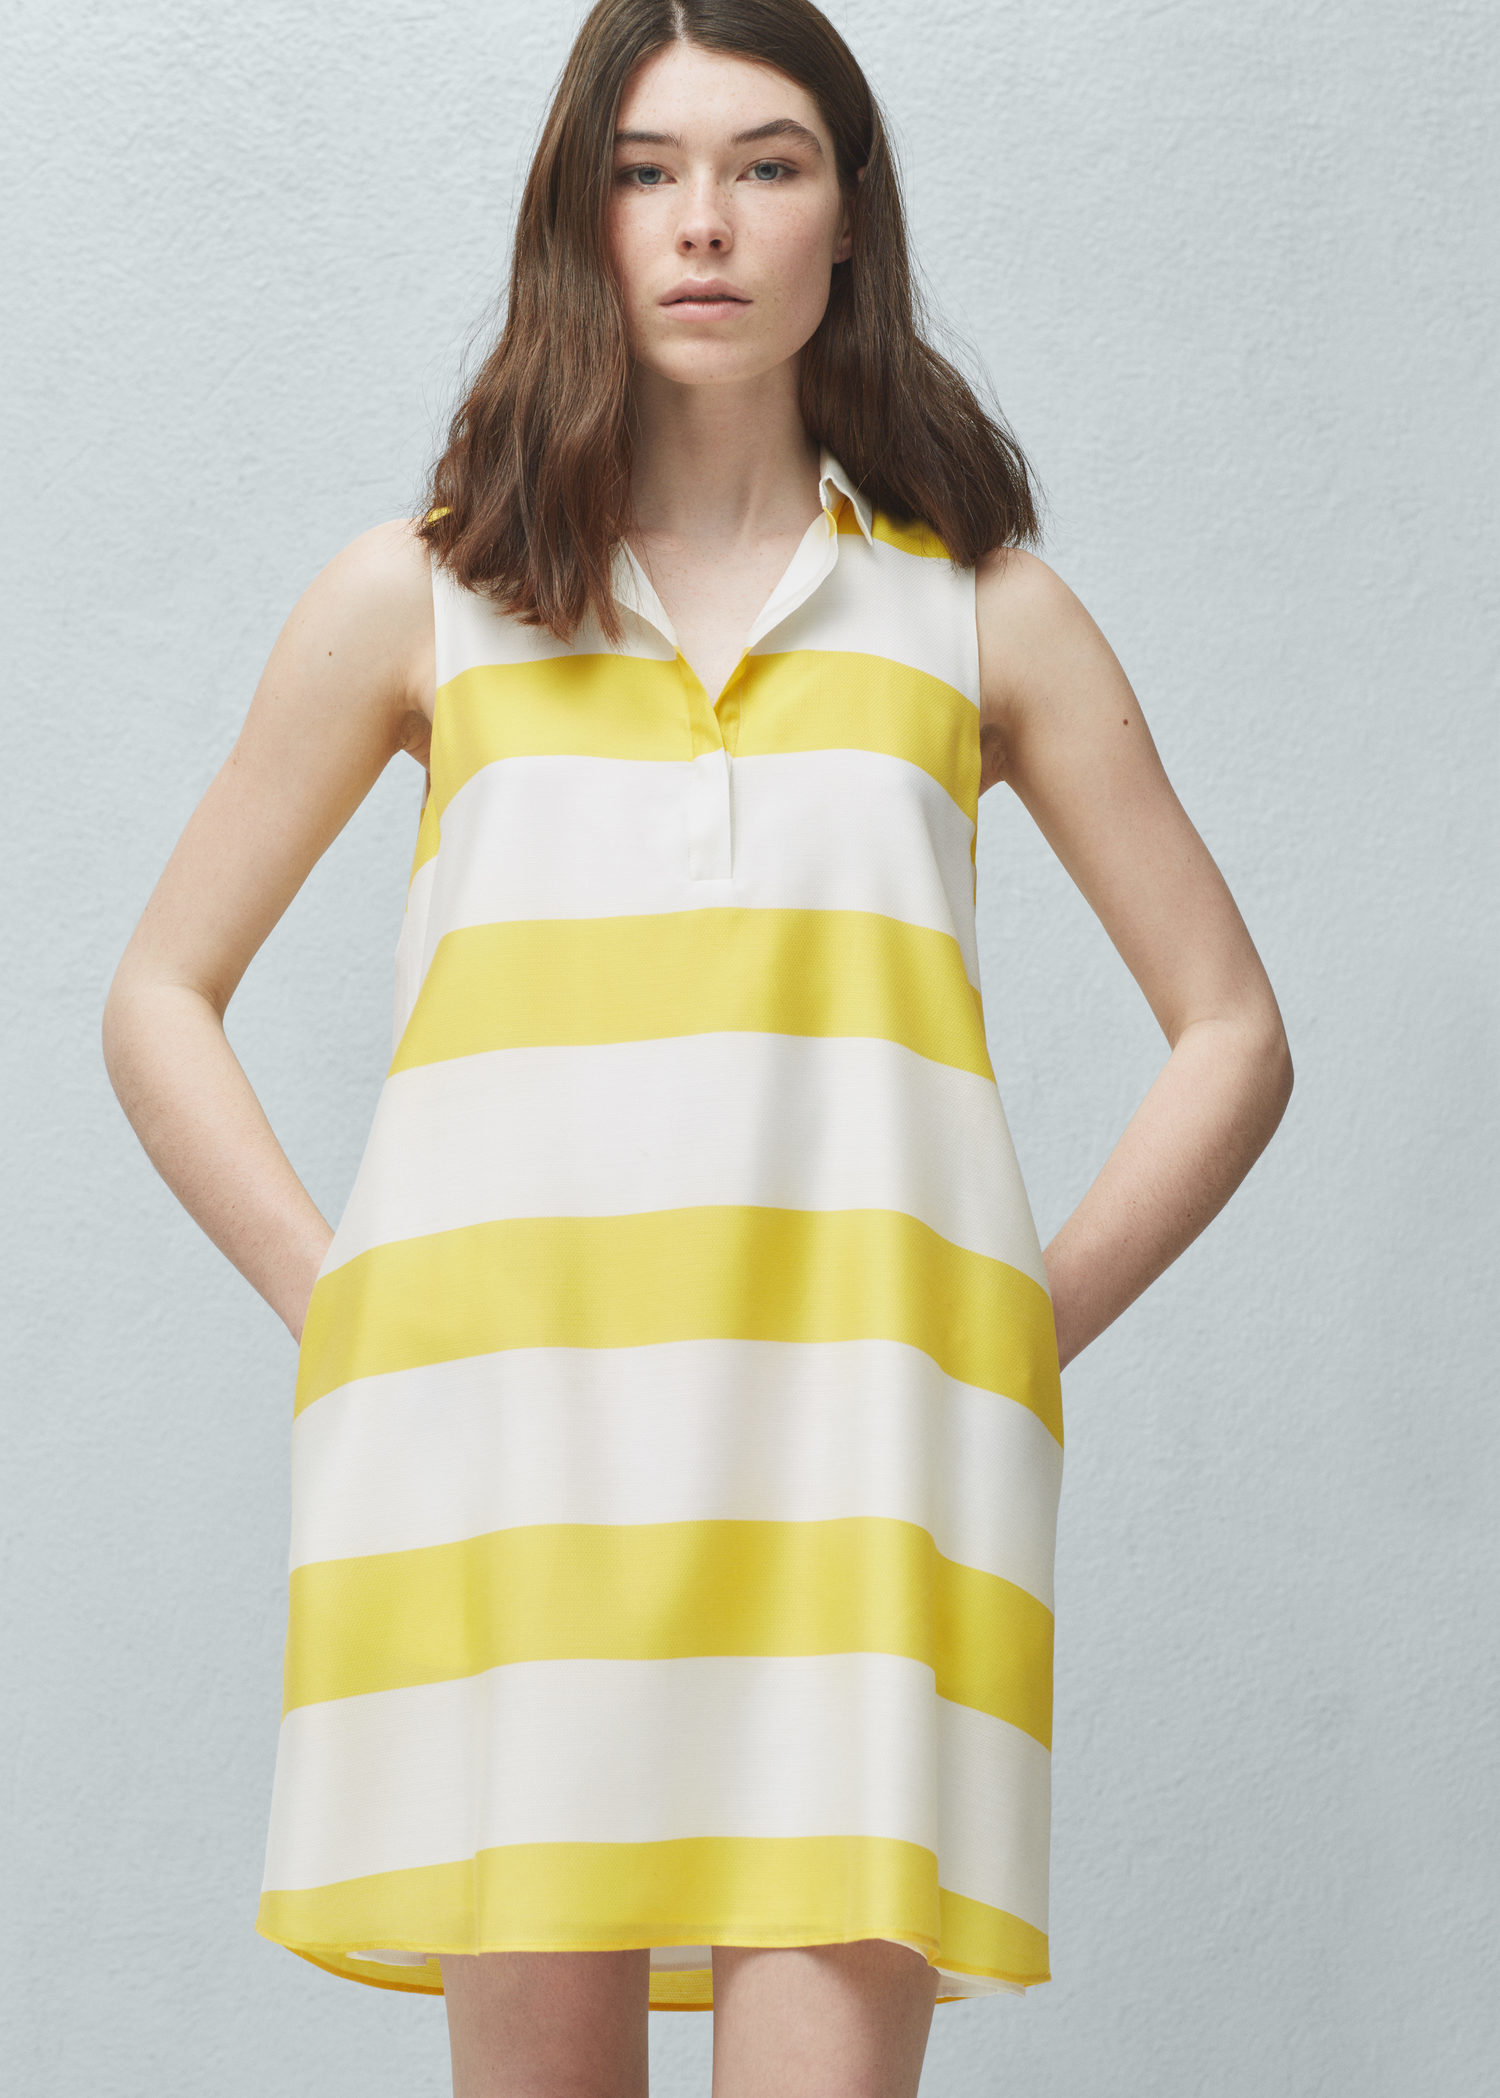 Lyst Mango Striped  Shirt  Dress  in White